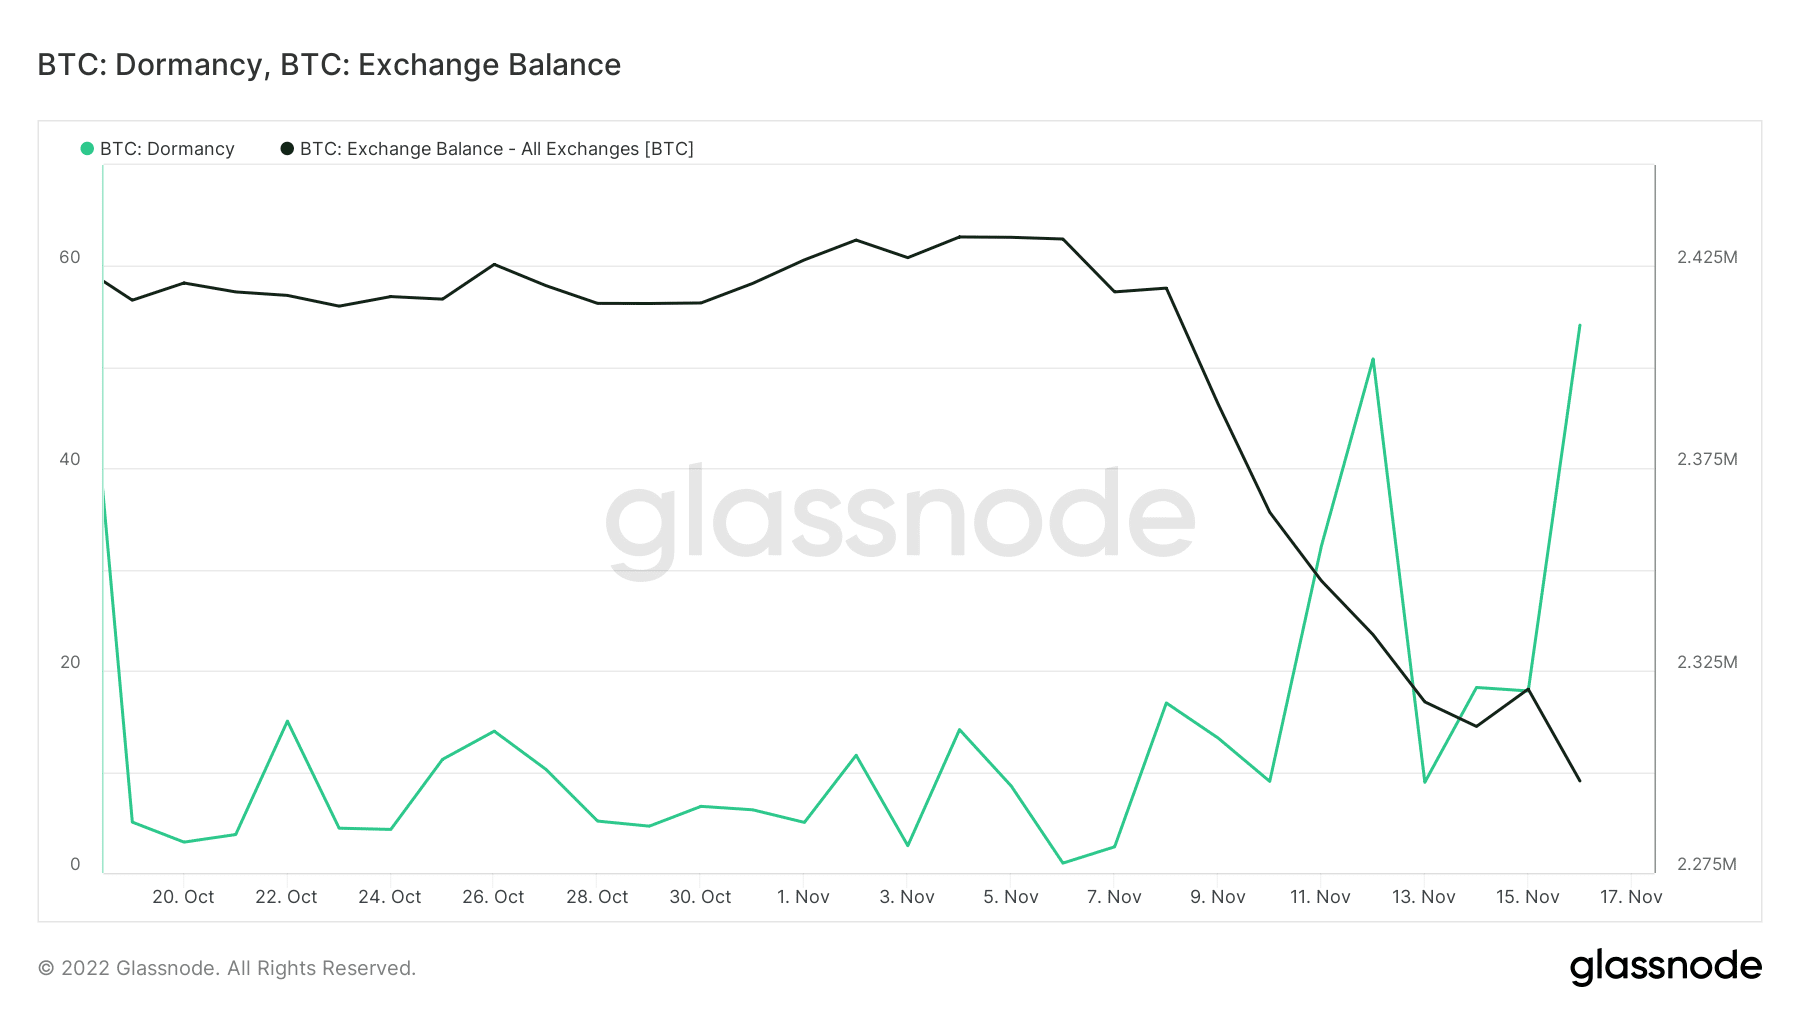 Bitcoin exchange balance and dormancy